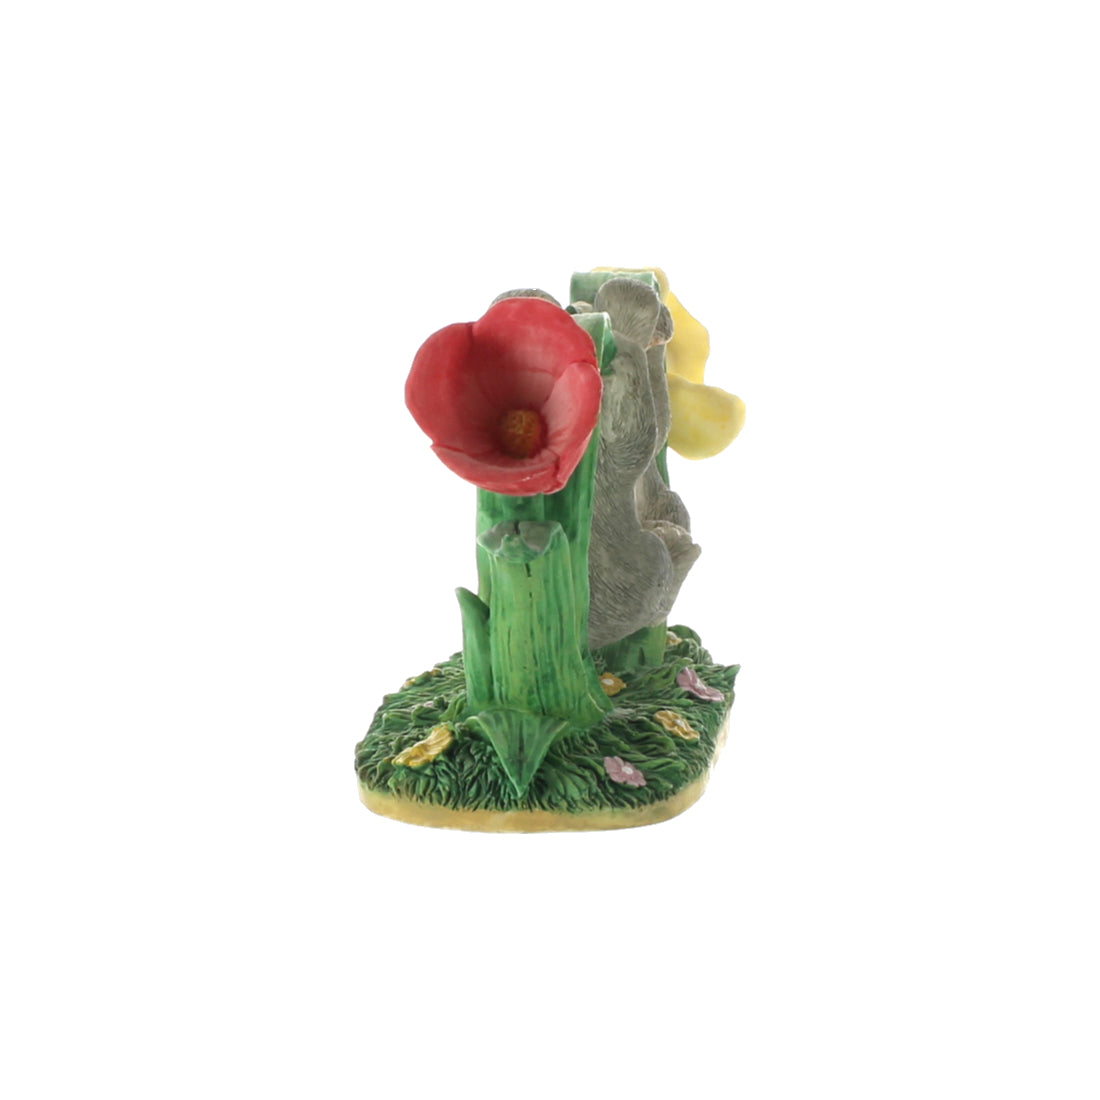 Charming-Tails-Resin-Figurine-Bunny-Buddies-89619